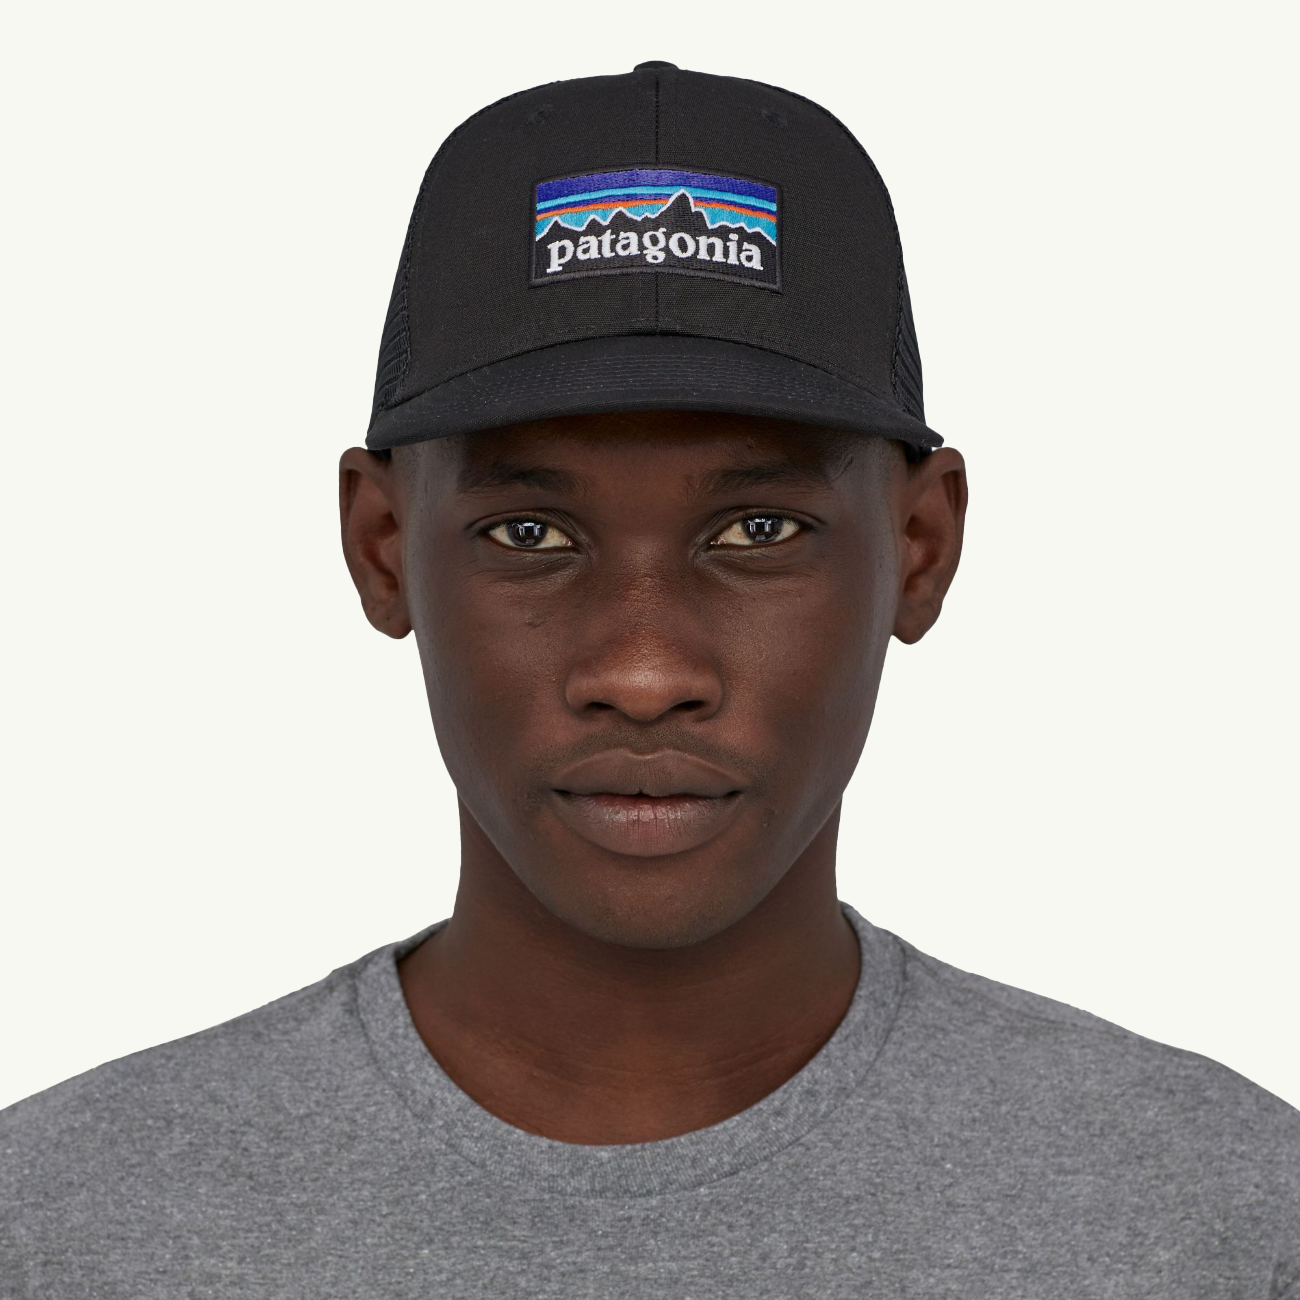 P6 Logo Trucker Hat - Black